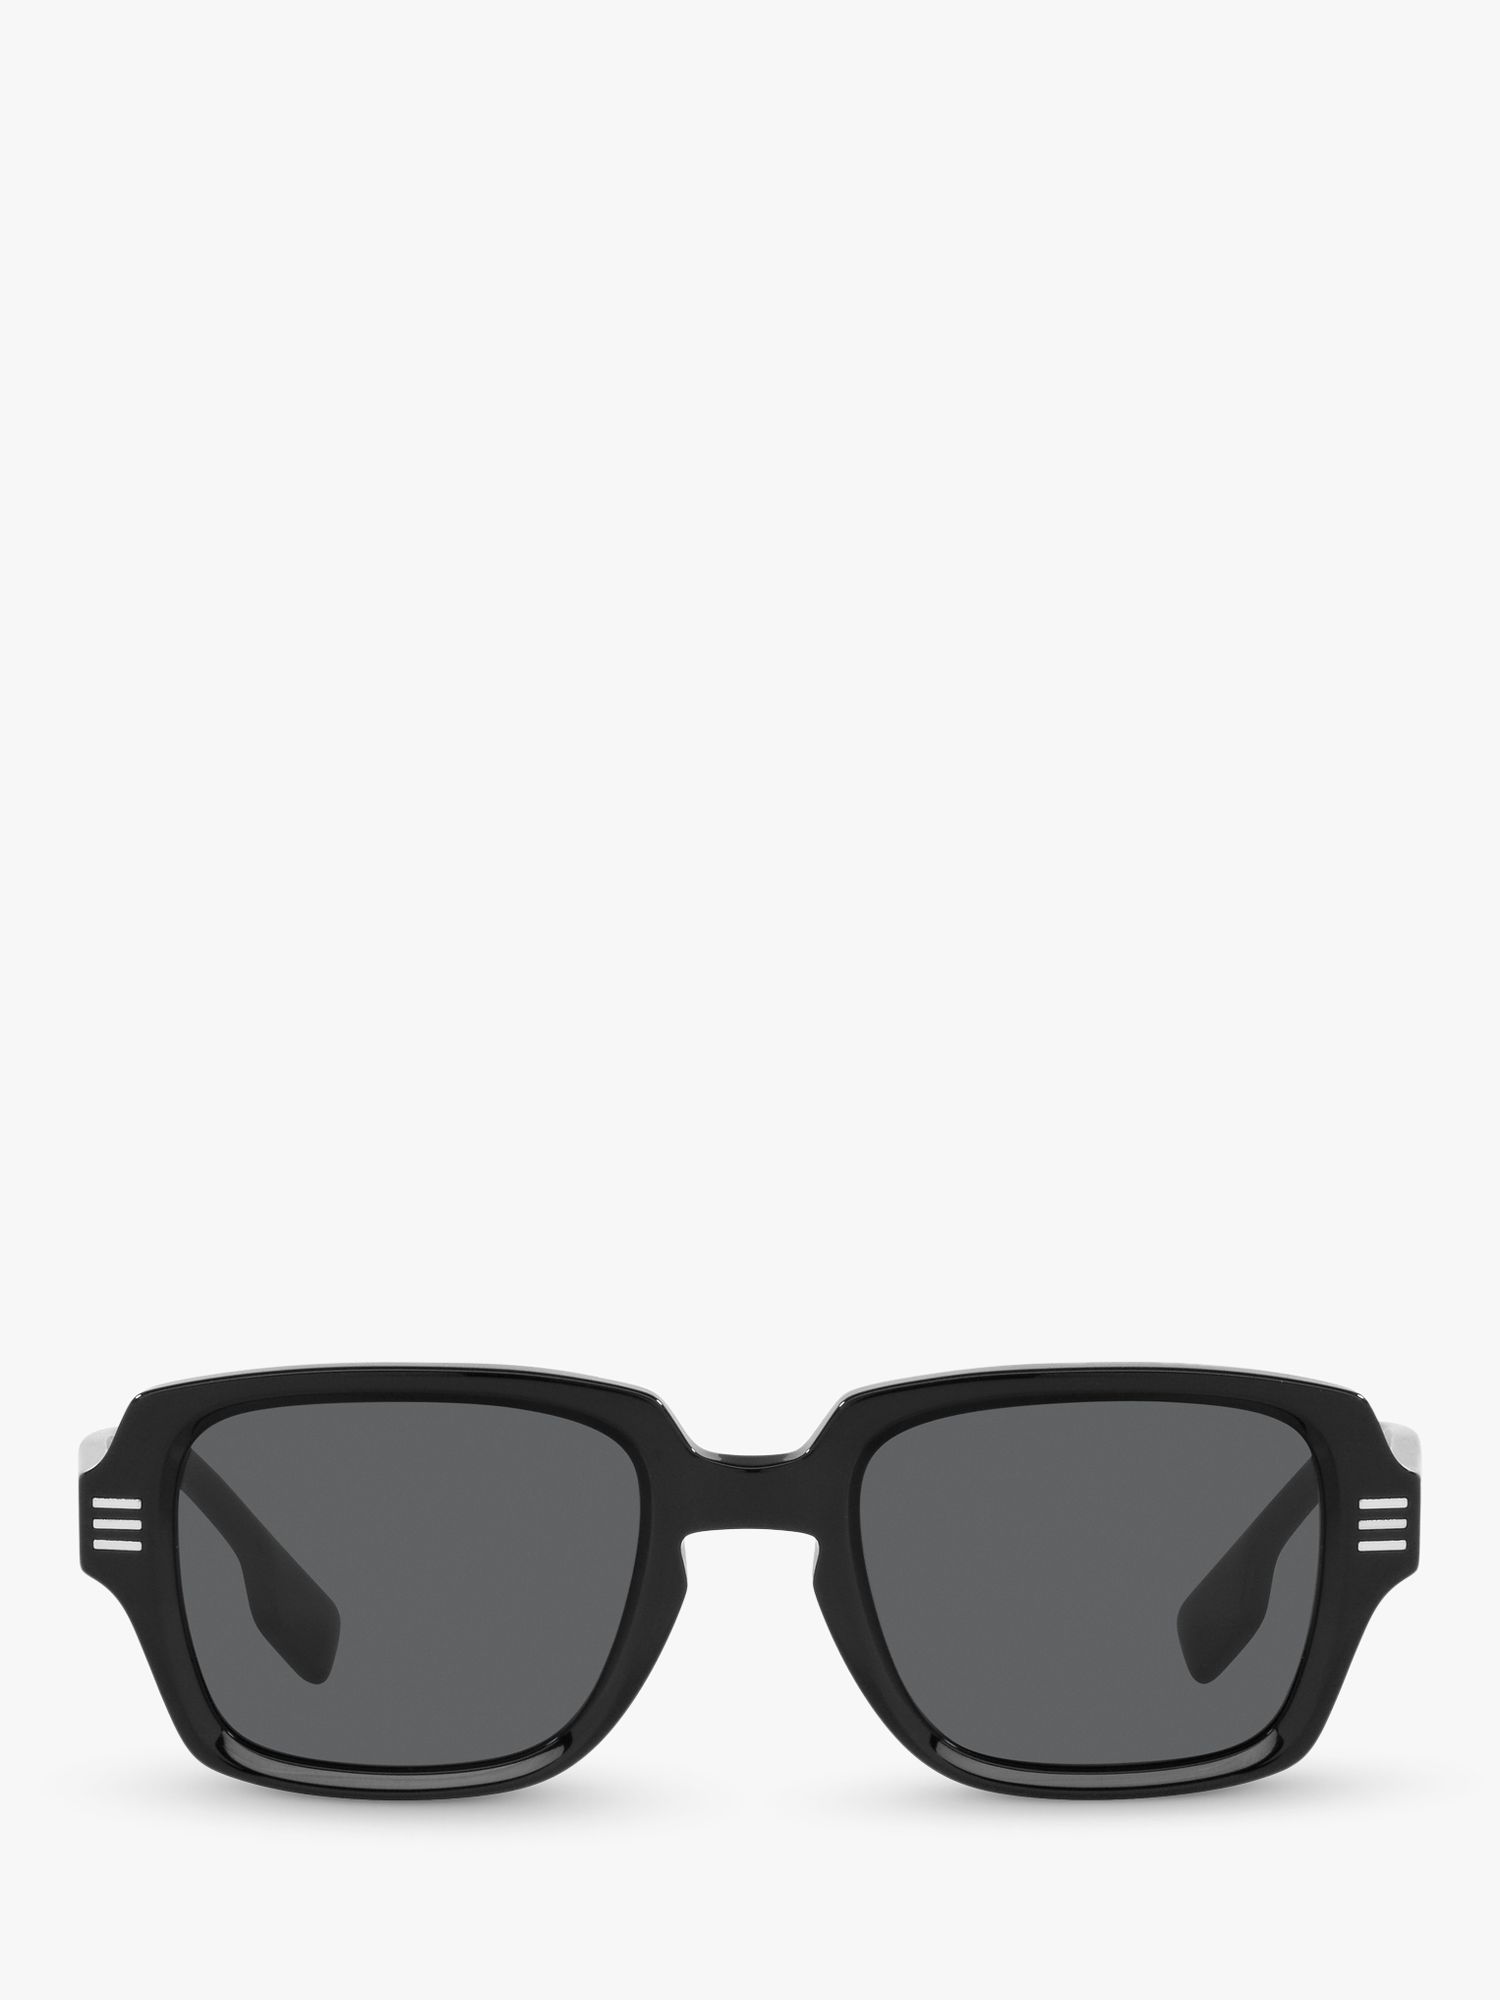 Buy Burberry BE4349 Men's Rectangular Sunglasses Online at johnlewis.com